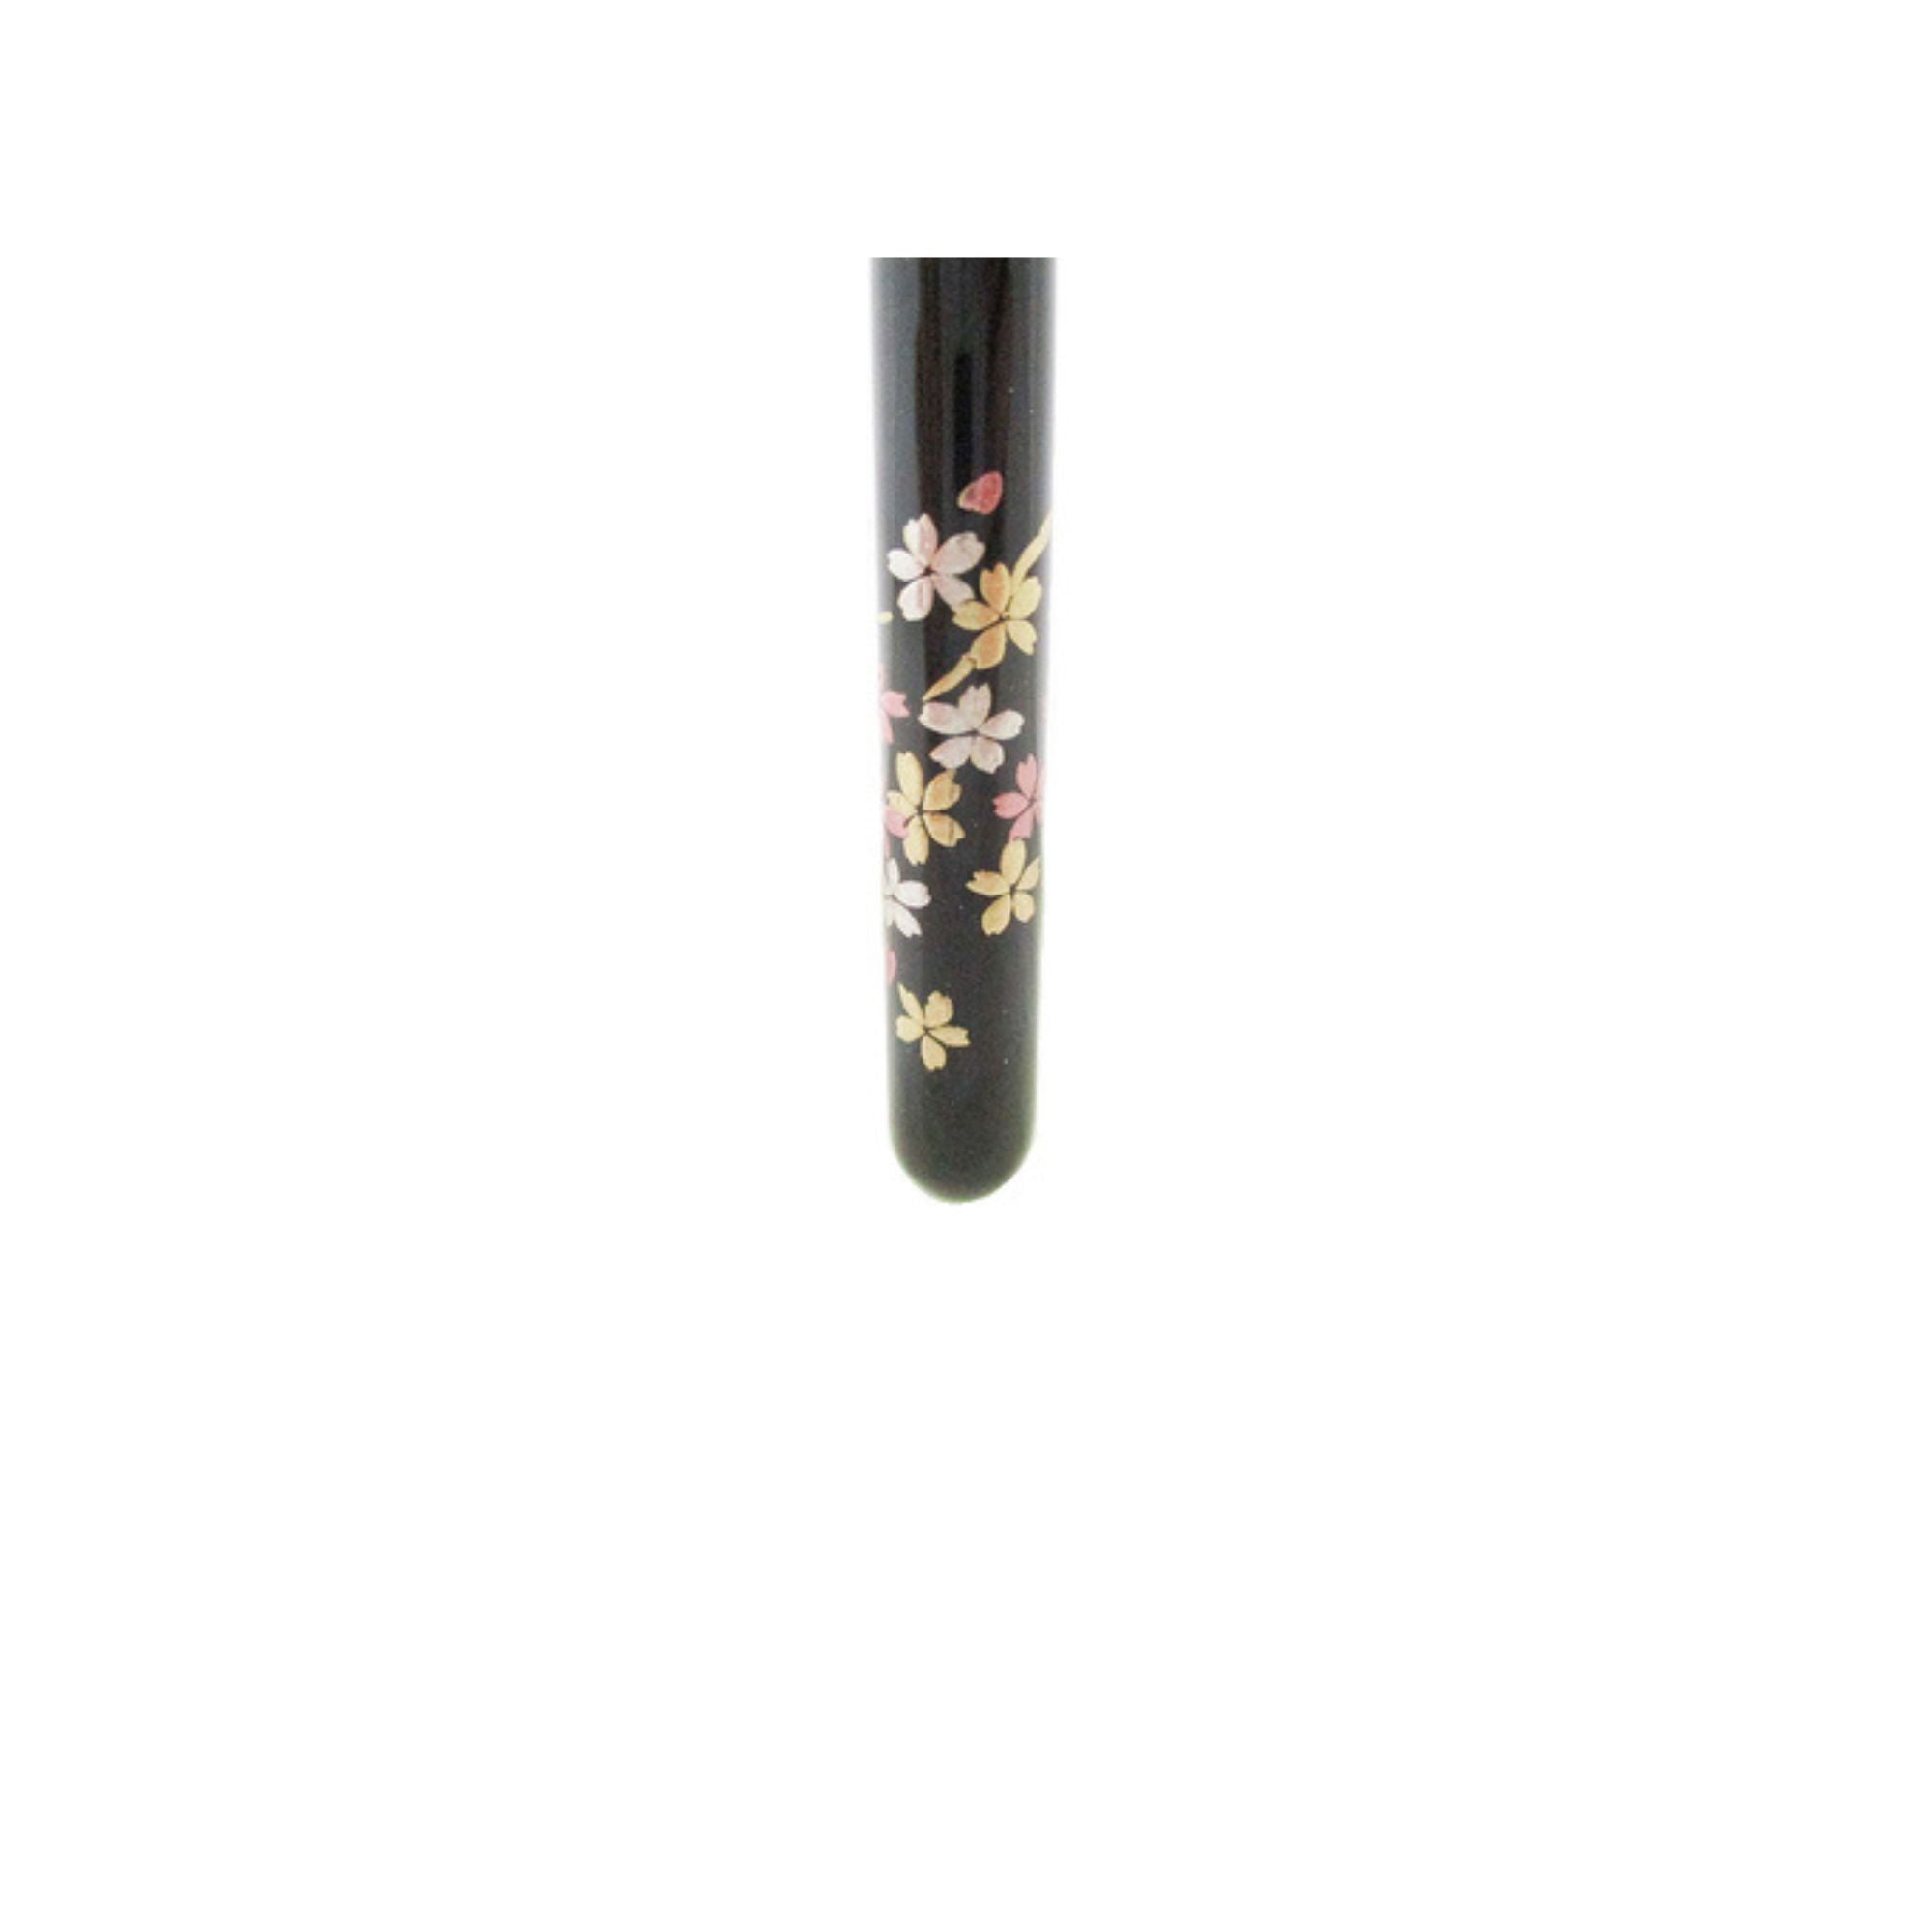 Eihodo Makie Eyeshadow Brush RE10-1 Sakura 小桜 – Red, Black Handles (Limited) - Fude Beauty, Japanese Makeup Brushes